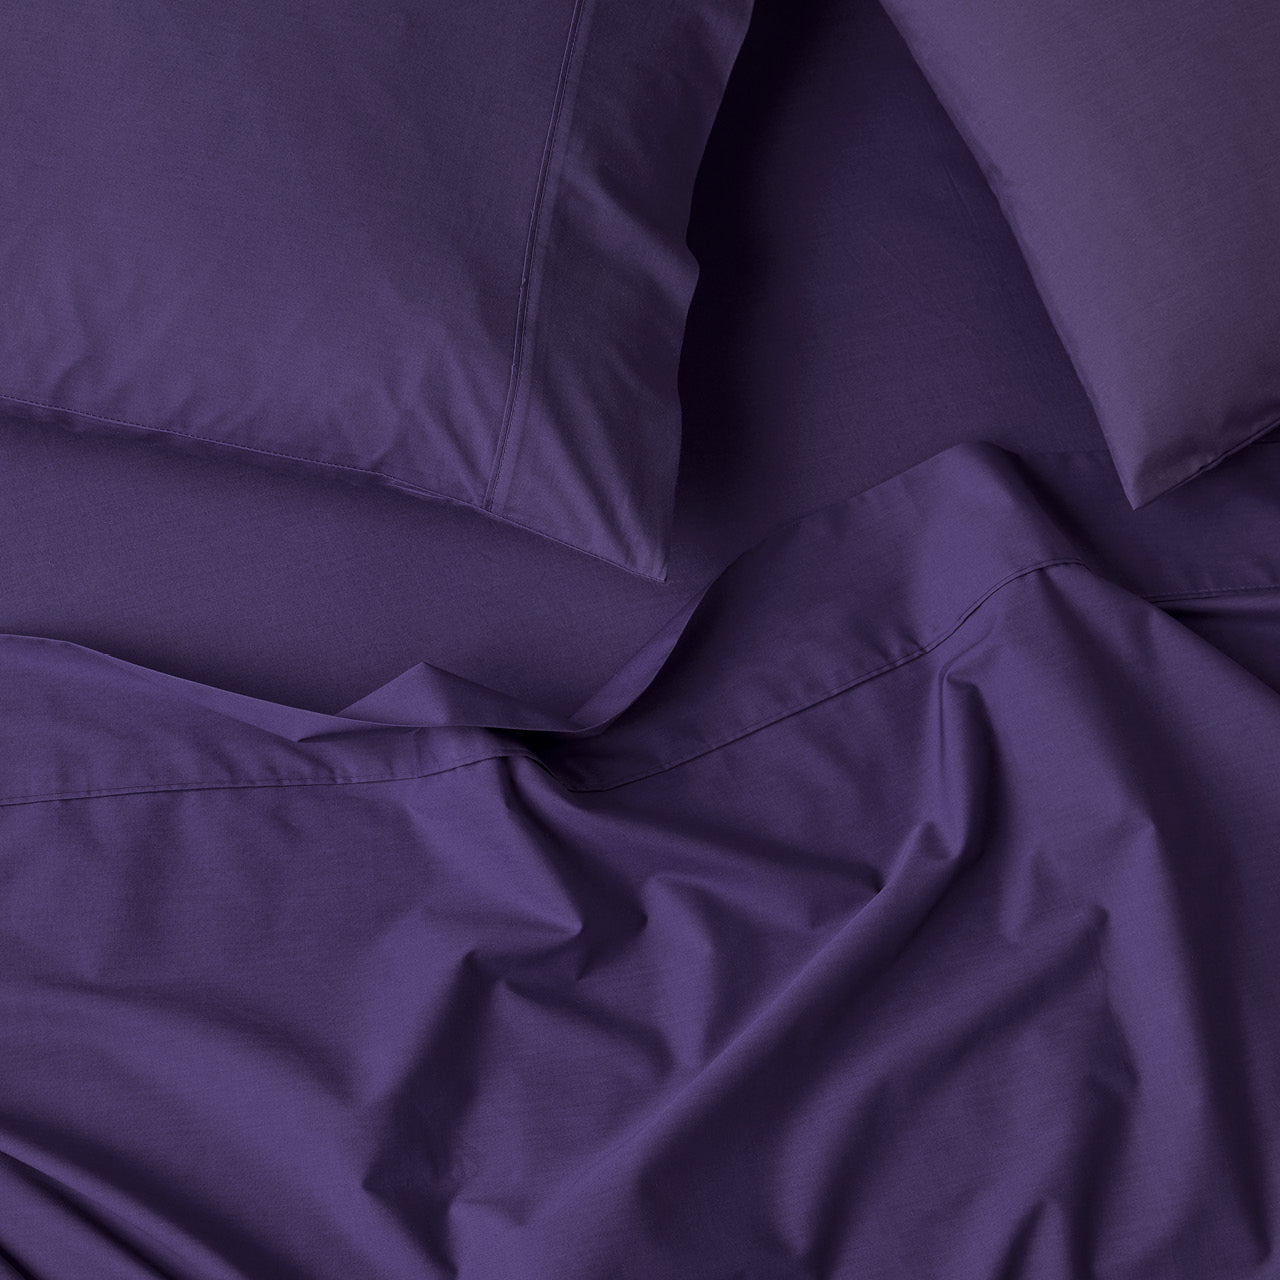 Close up shot of Premium Percale Purple Sheets